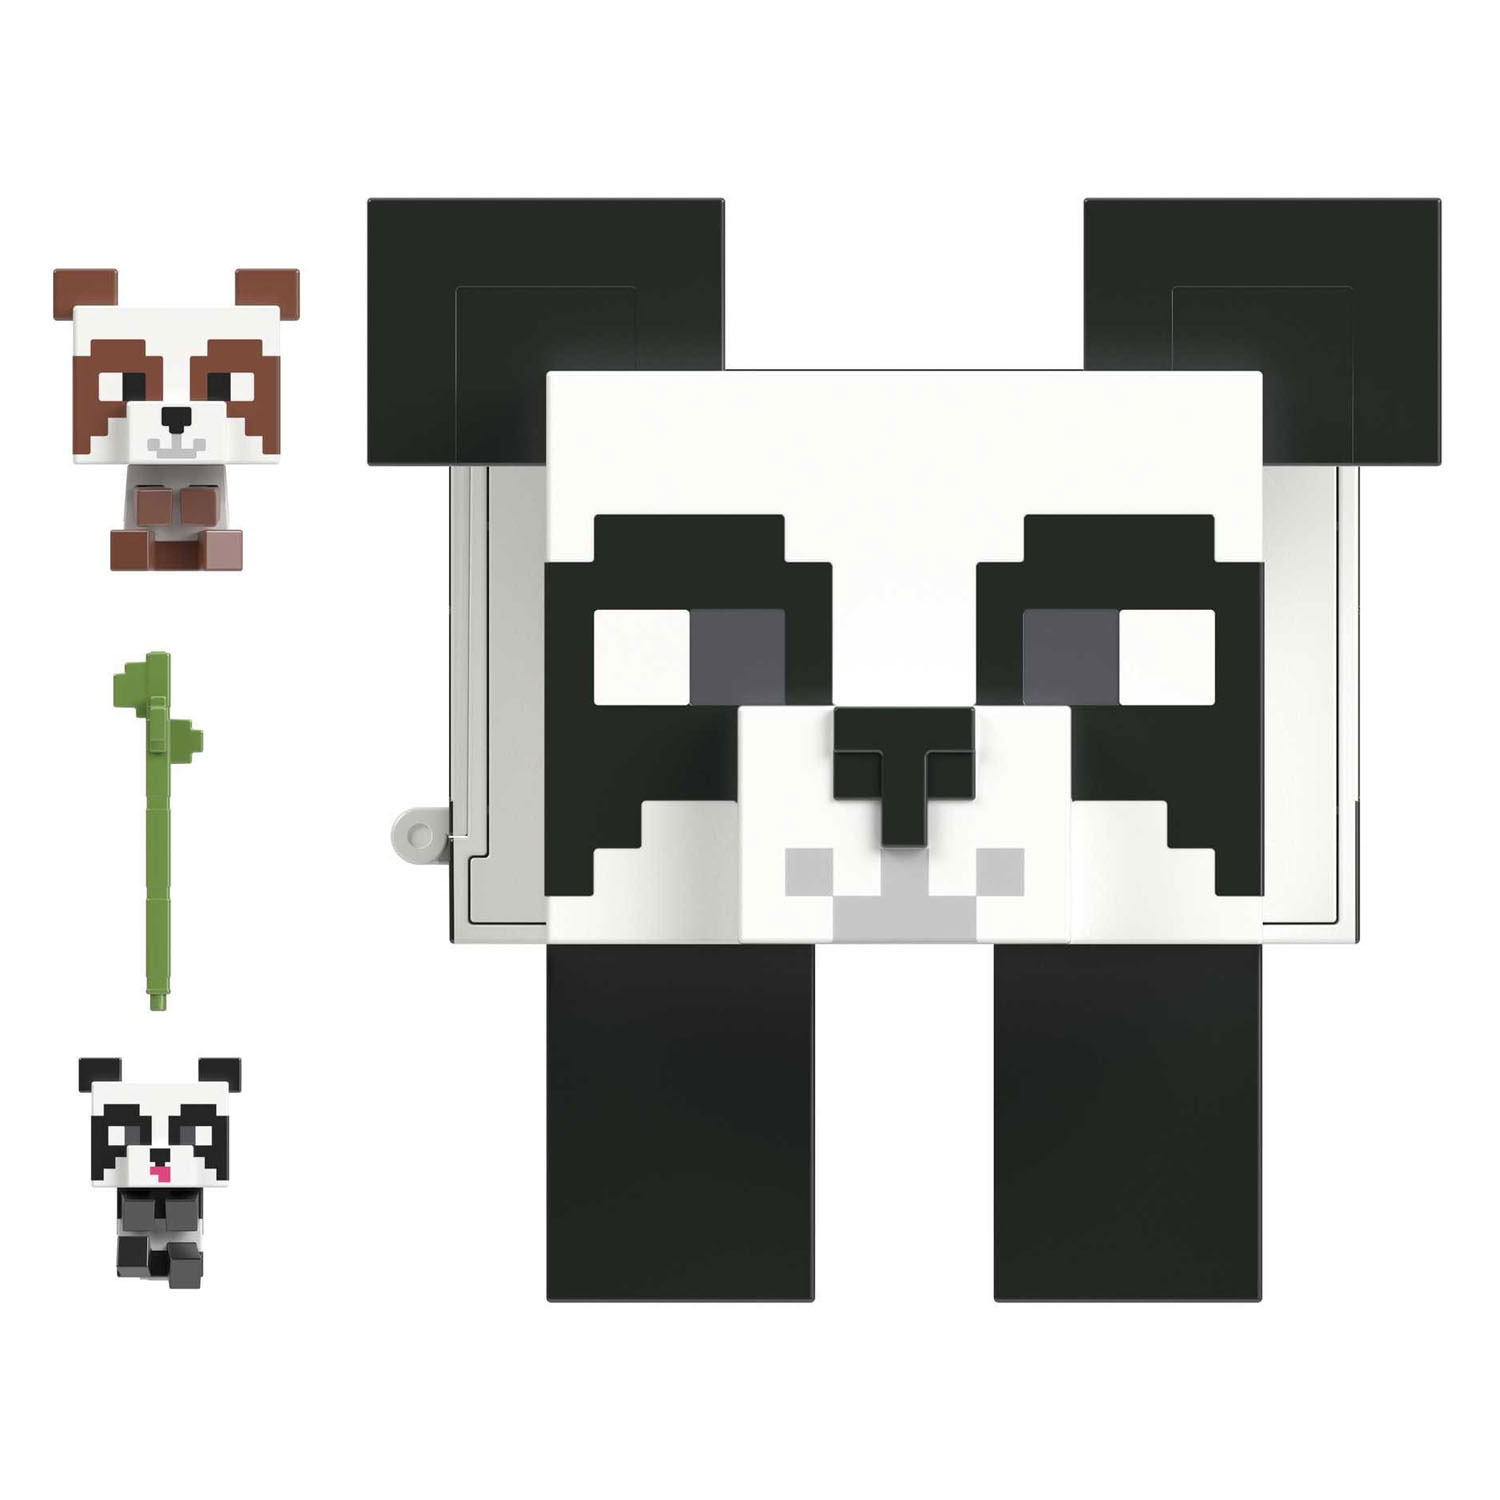 Minecraft MOB Head Mini-Panda-Spielhaus-Spielset